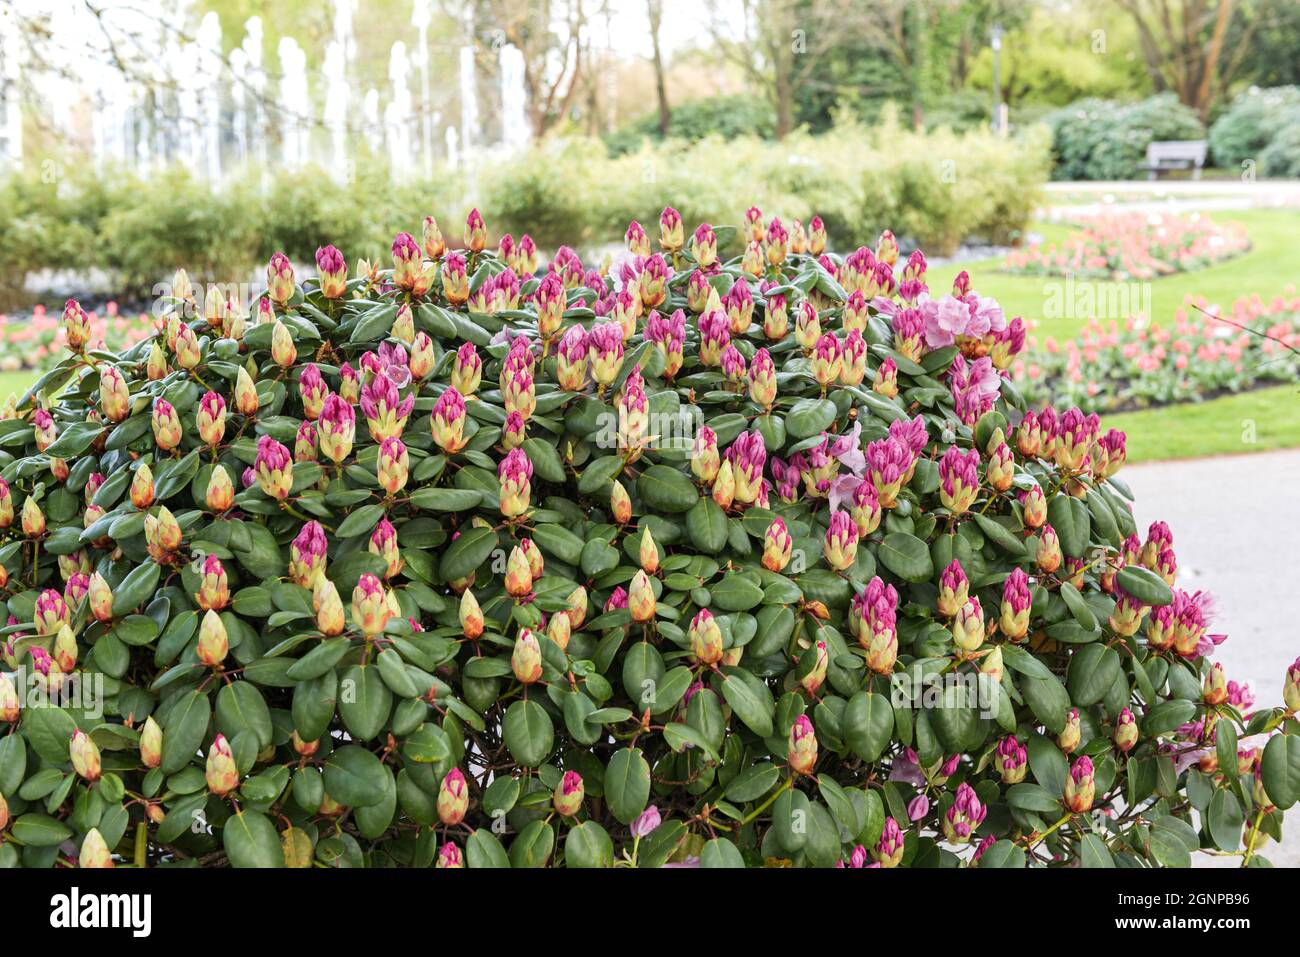 rhododendron (Rhododendron 'Vater Boehlje', Rhododendron Vater Boehlje), floraison, cultivar, cultvar Vater Boehlje, Allemagne Banque D'Images